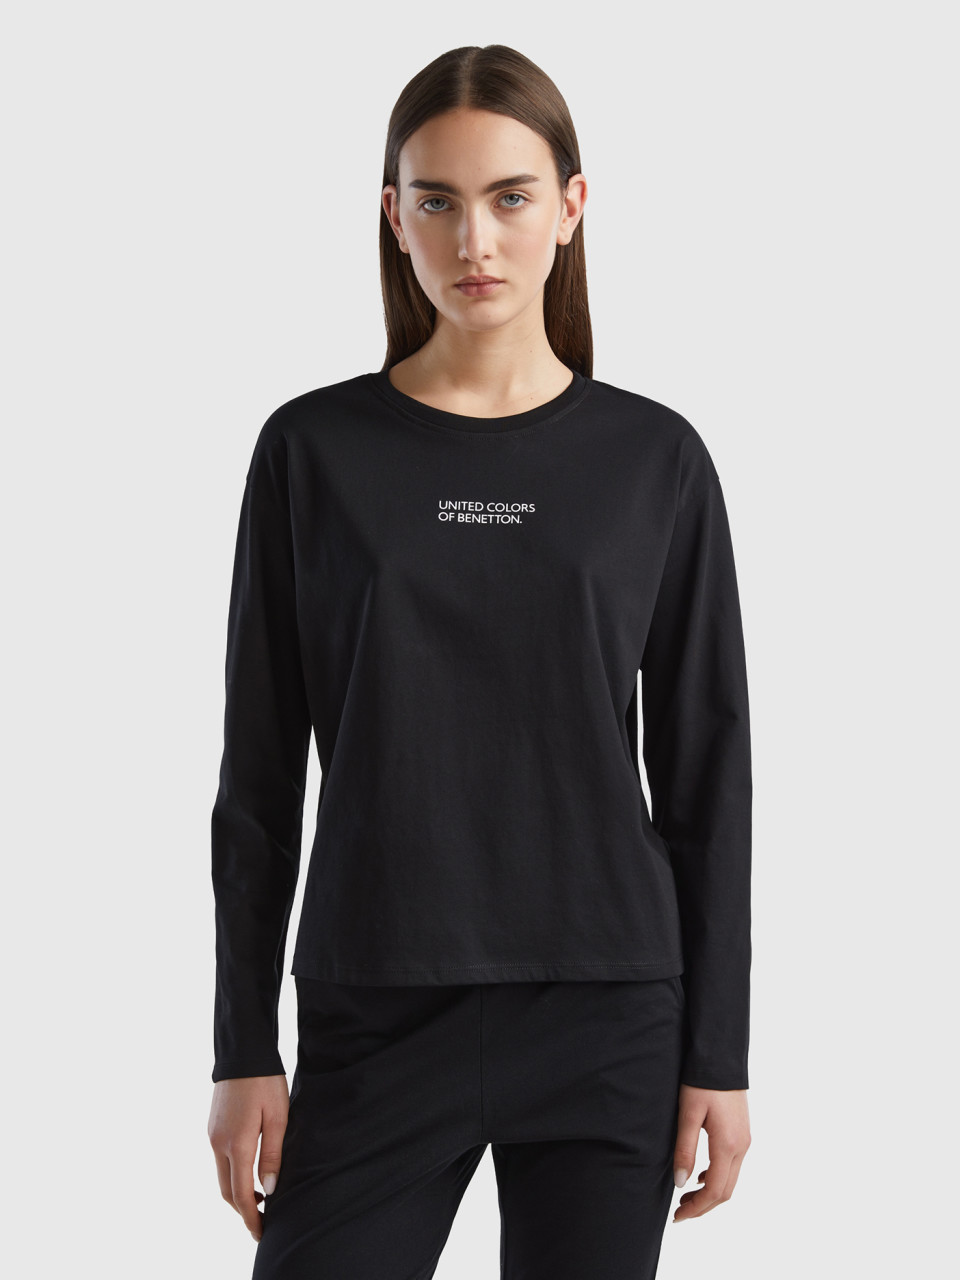 Benetton, T-shirt With Logo Print, Black, Women